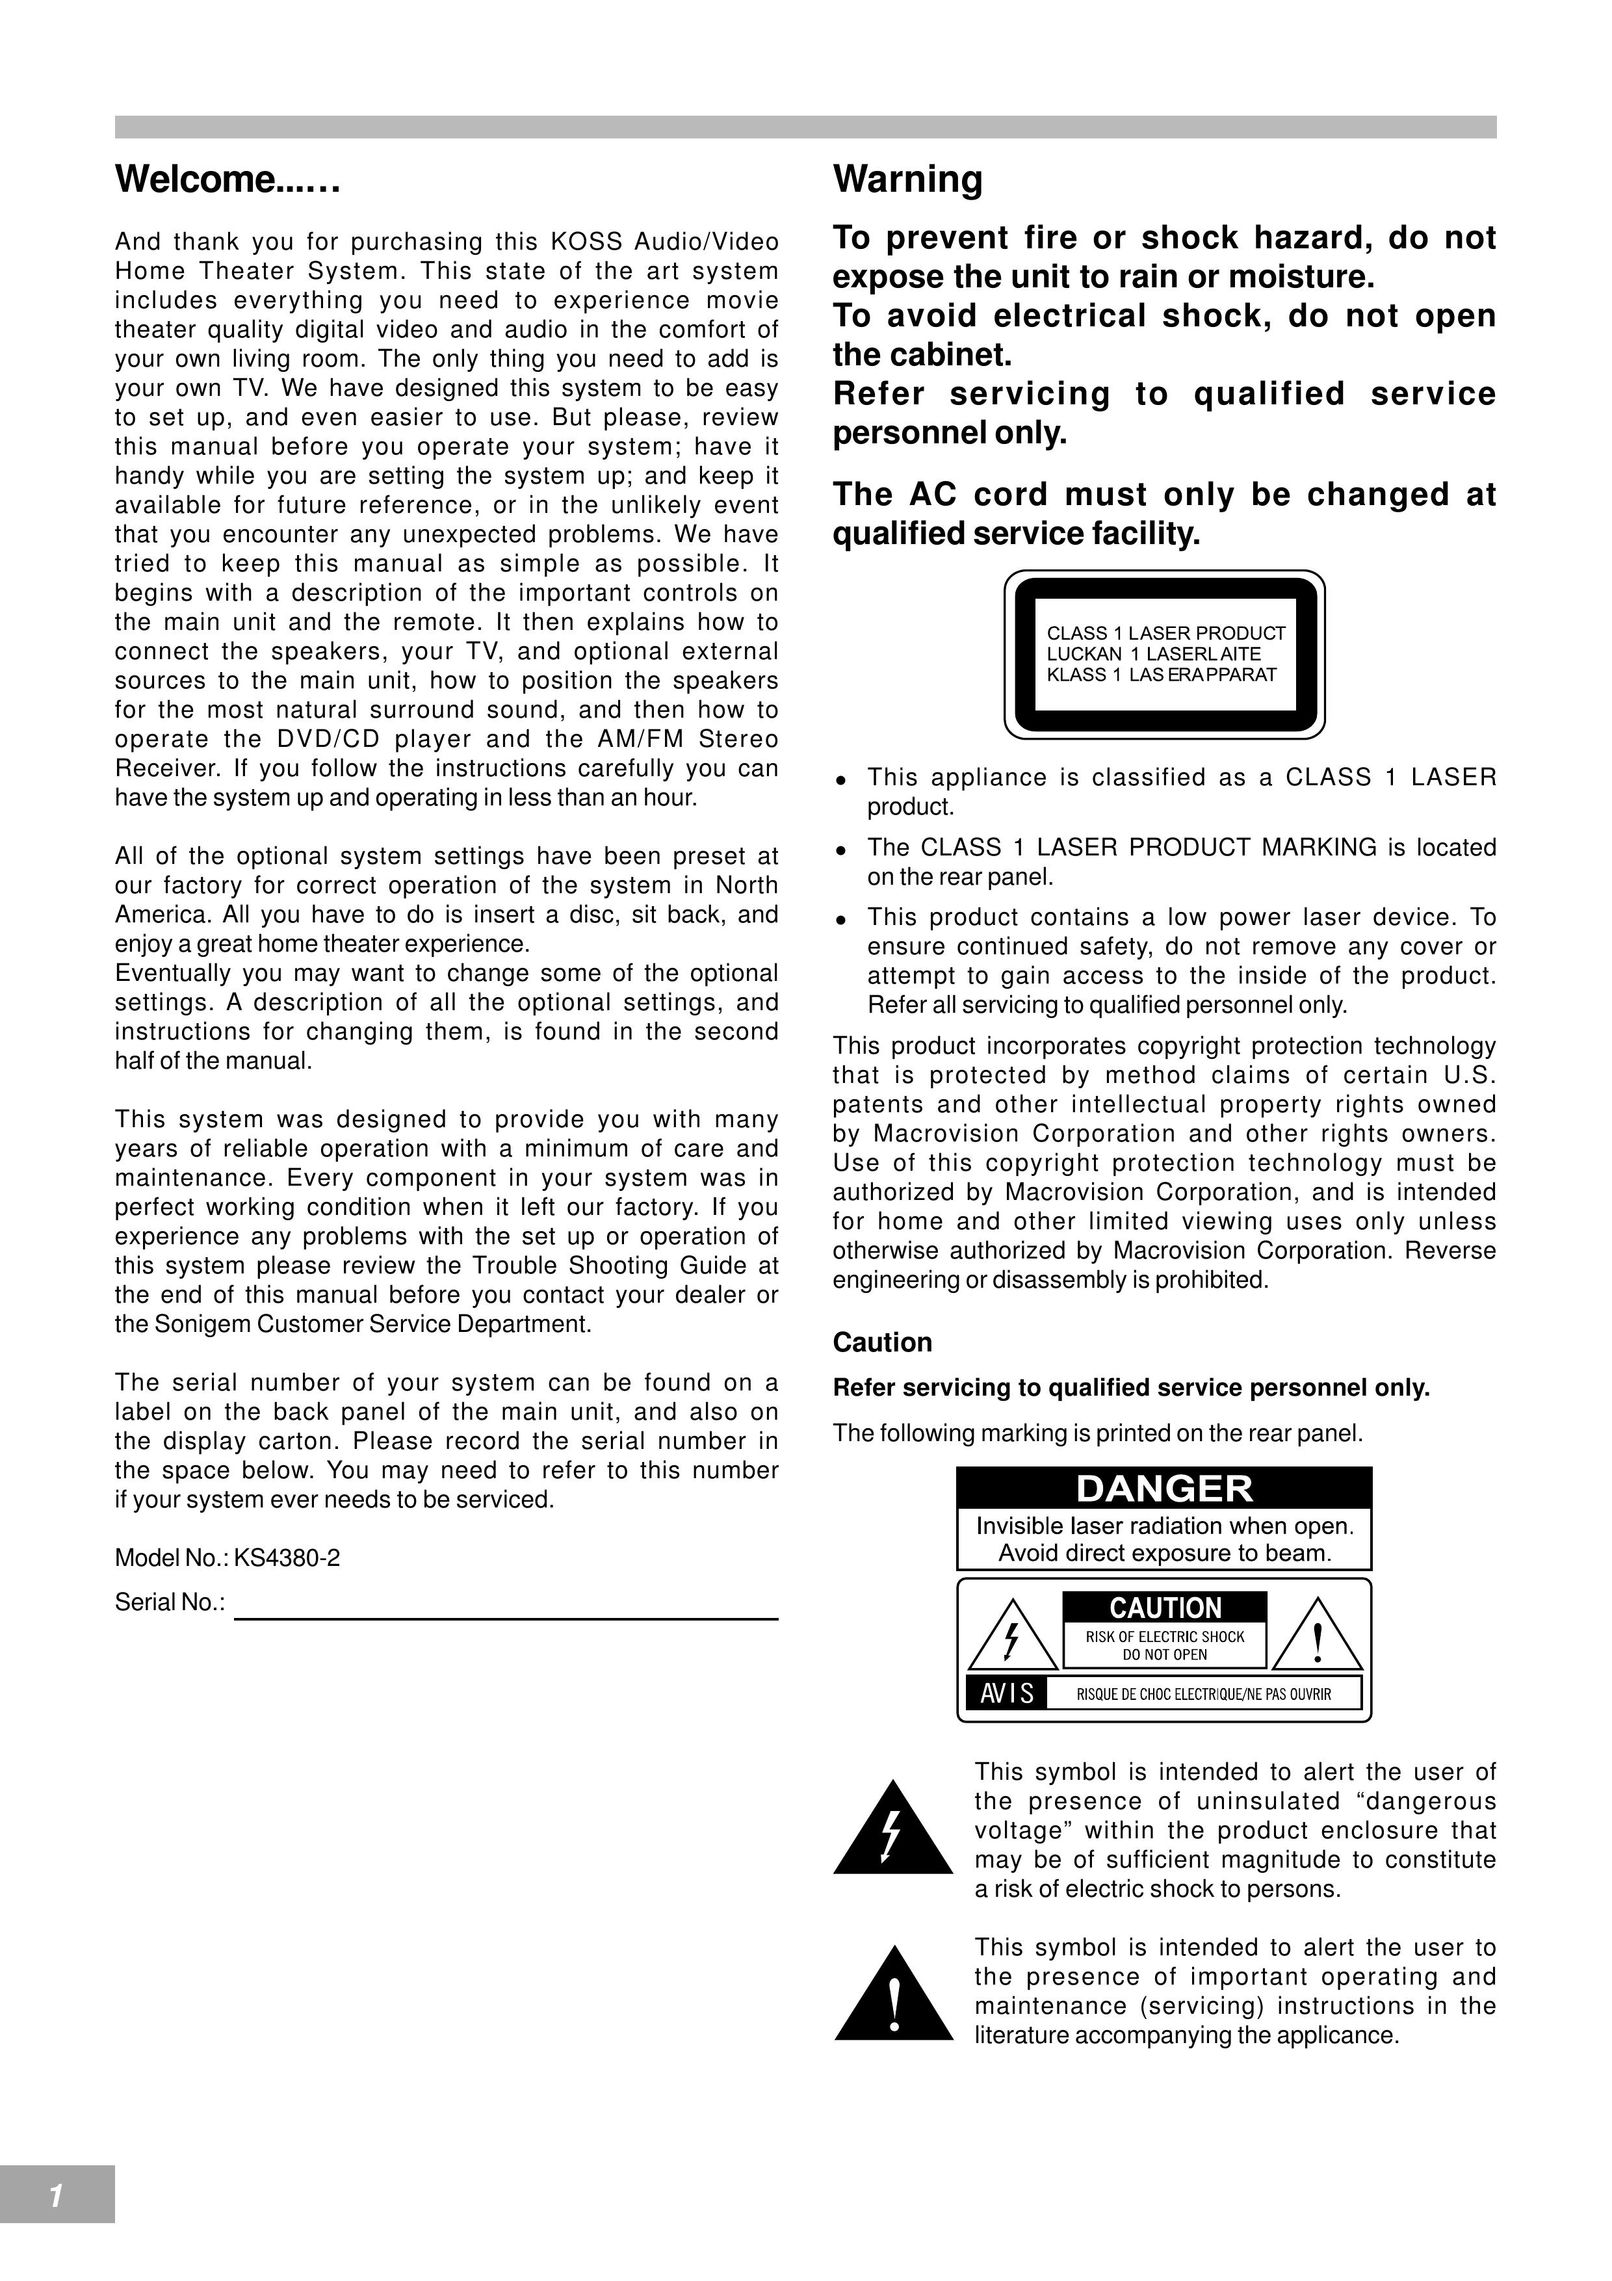 Koss KS4380-2 Home Theater System User Manual